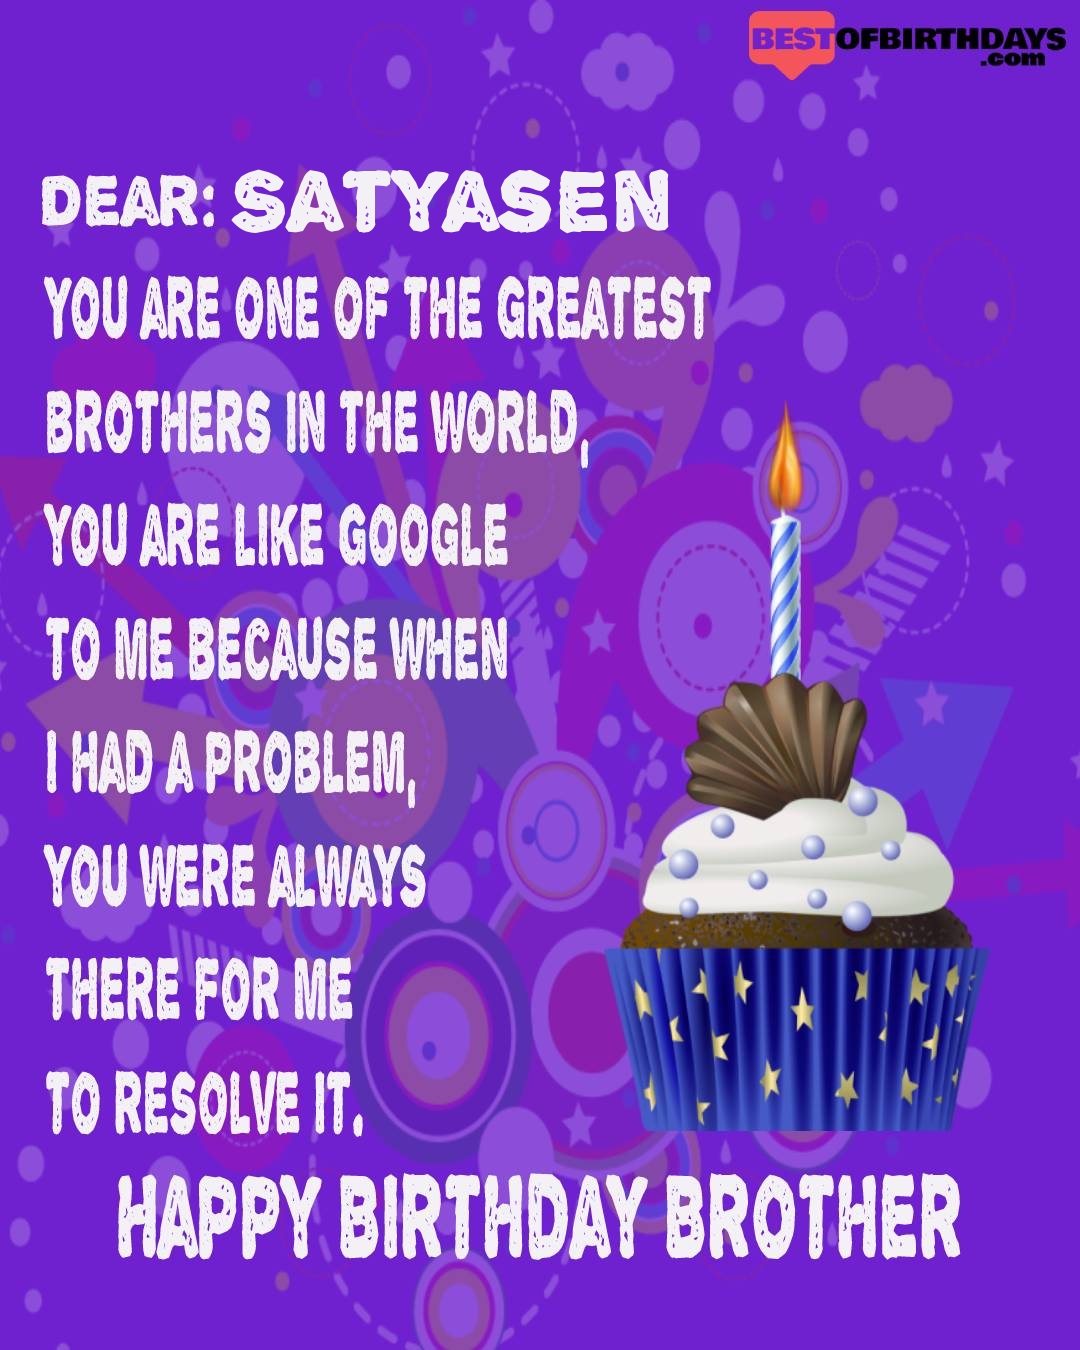 Happy birthday satyasen bhai brother bro